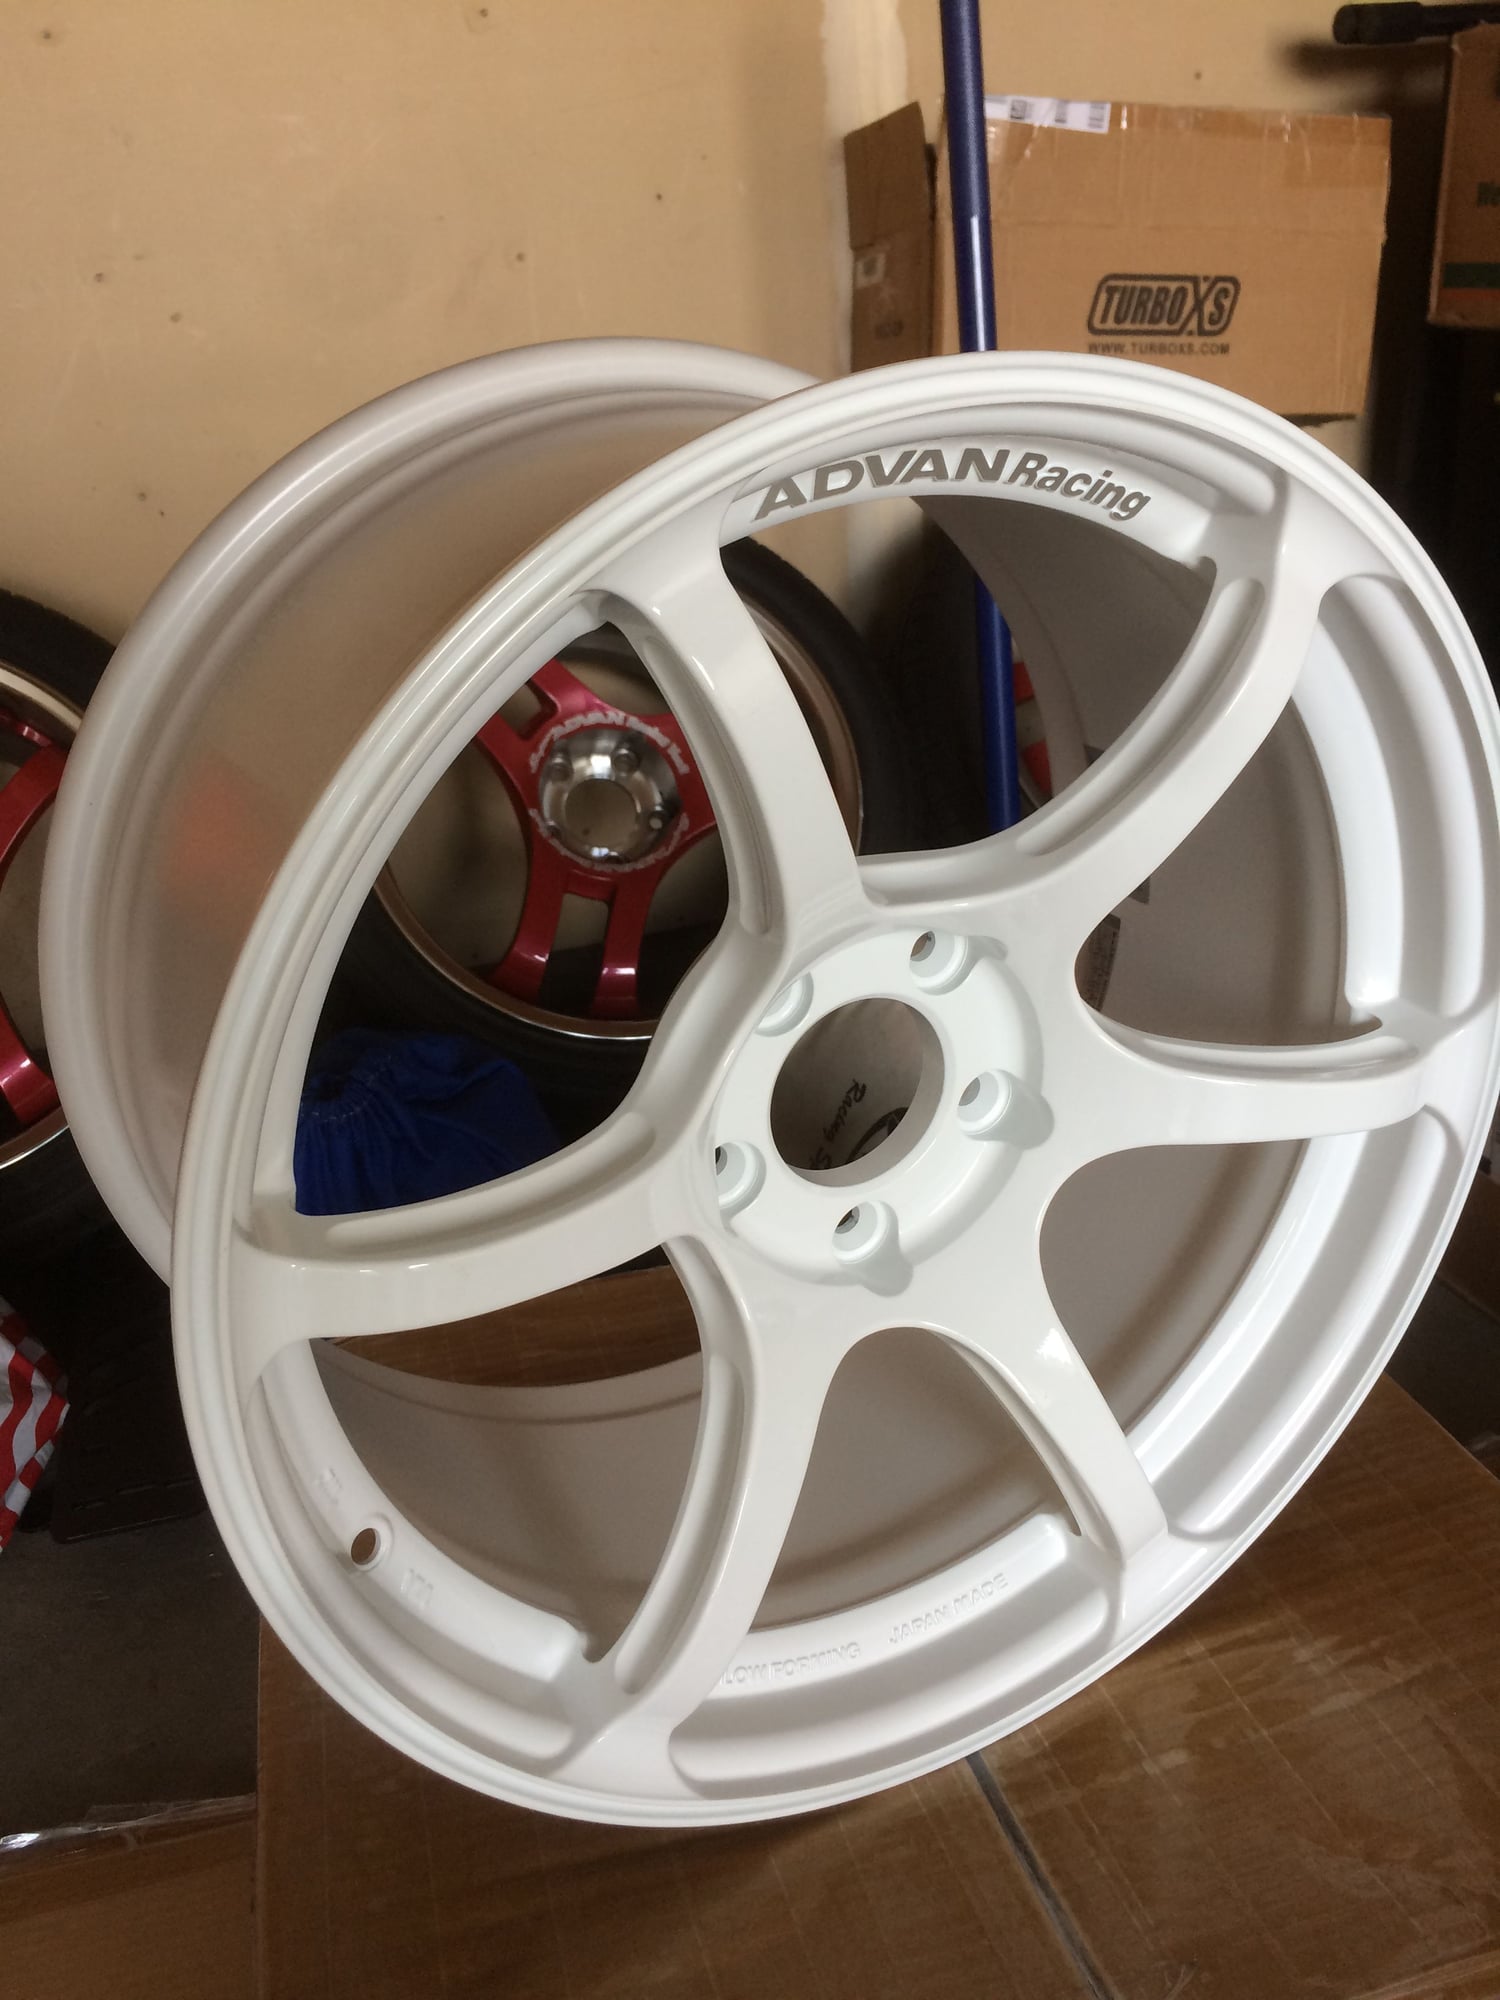 Wheels and Tires/Axles - ADVAN Racing RGIII 18x9.5 +45 (BNIB) - New - Foster City, CA 94404, United States